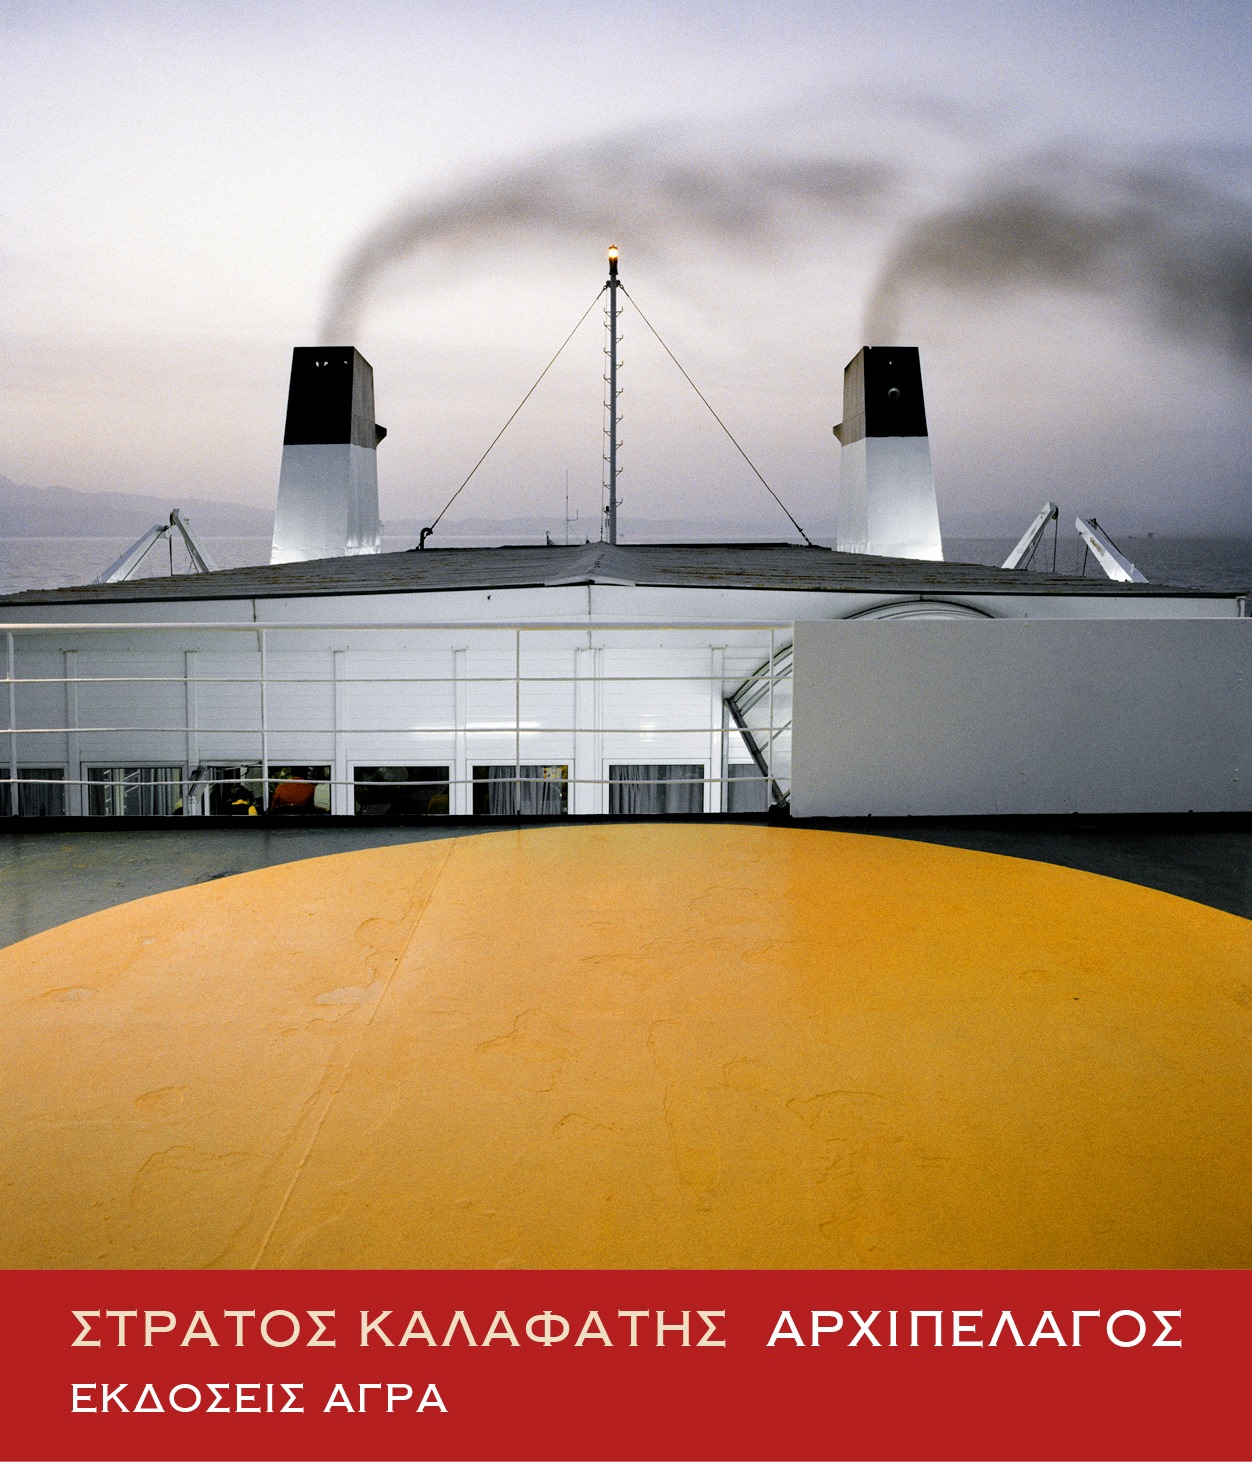 Book presentation “ΑRCHIPELAGO” by Stratos Kalafatis